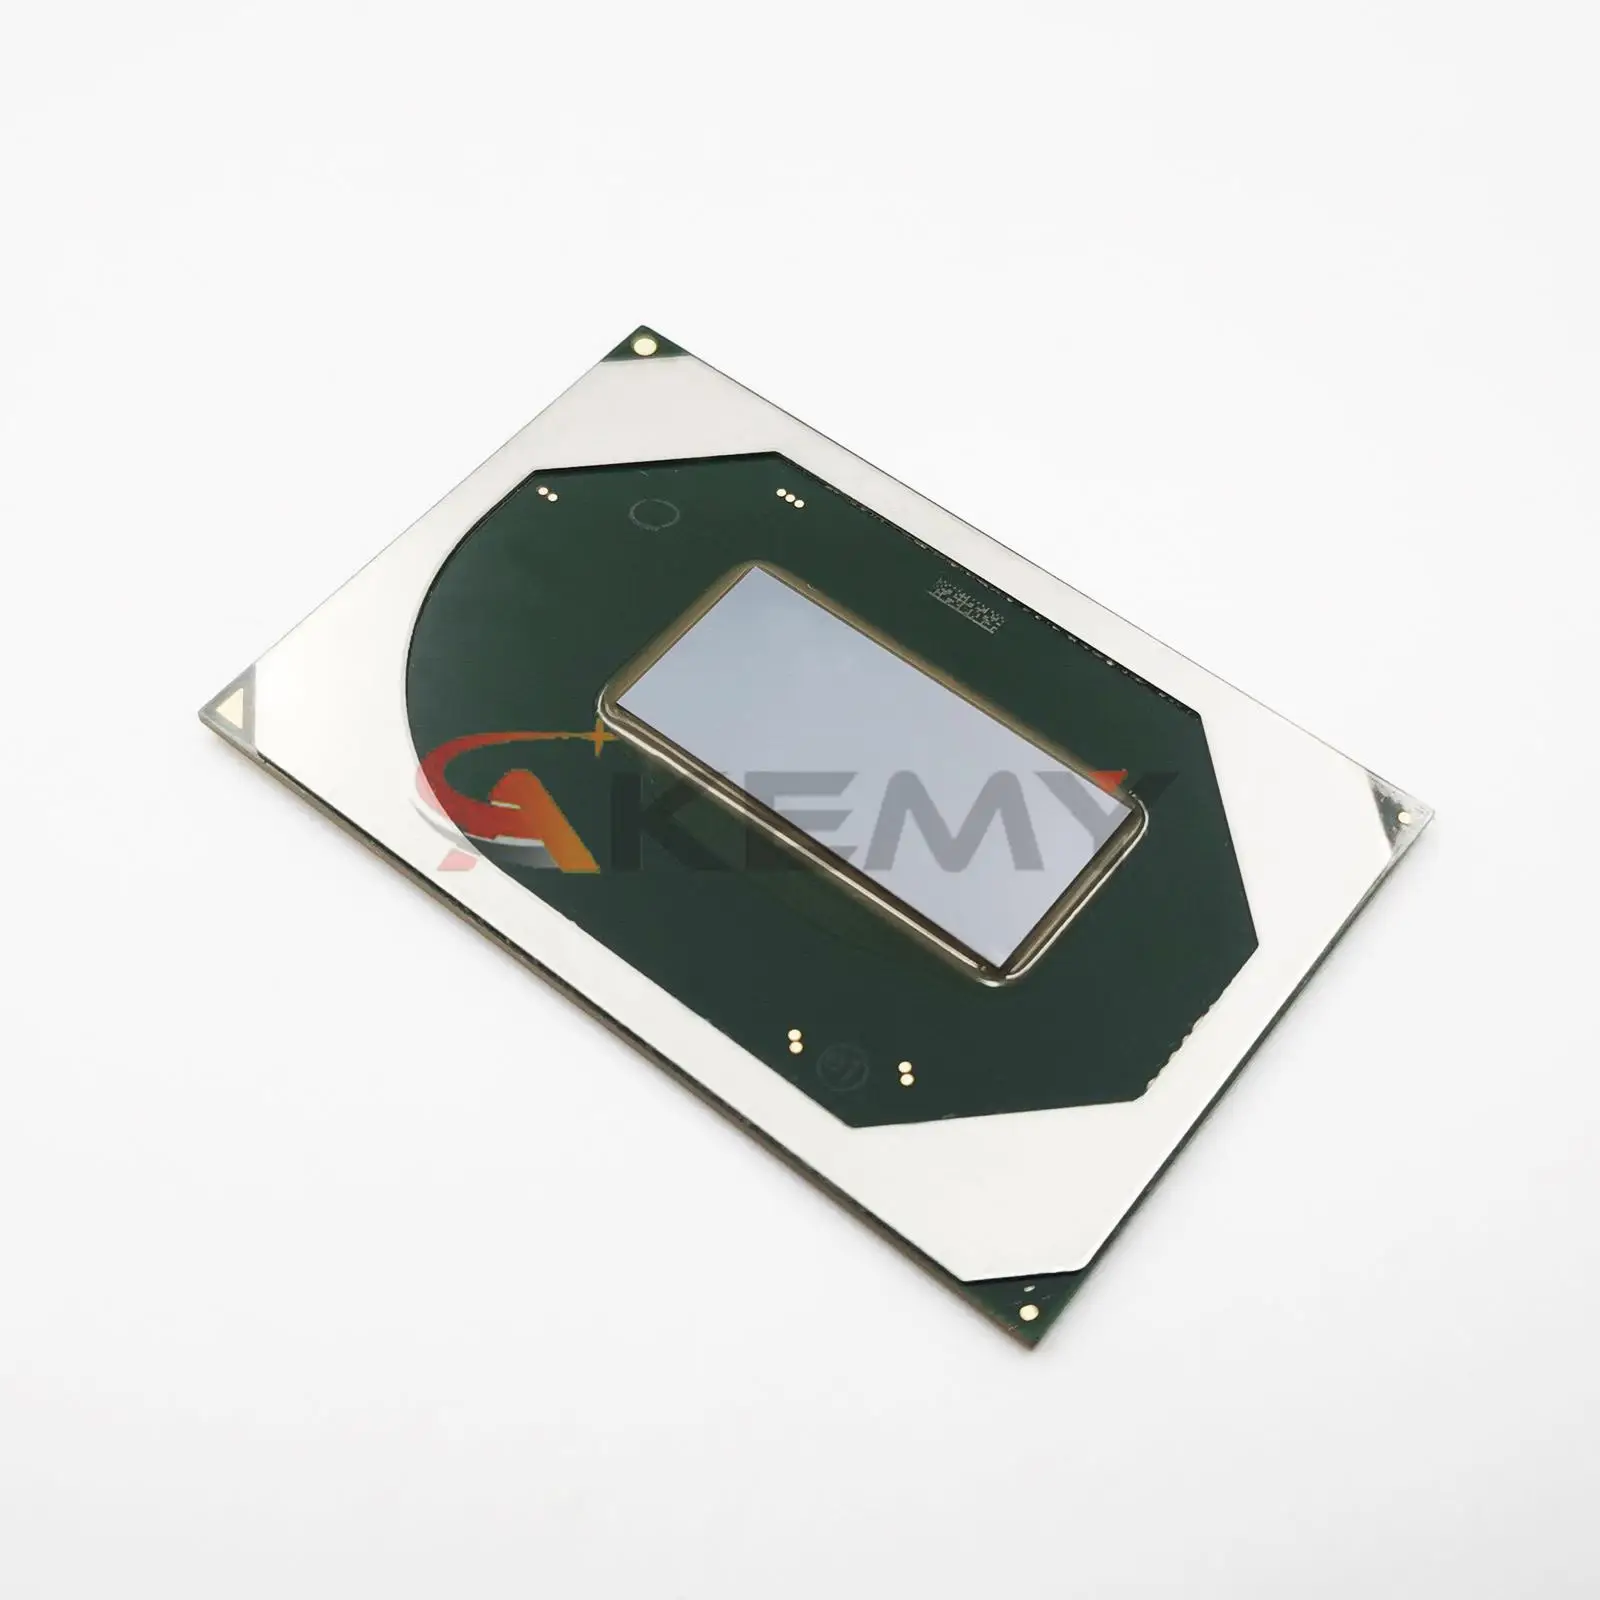 I9 9980HK Chipset BGA, SRFD0, I9-9980HK, 100% novo